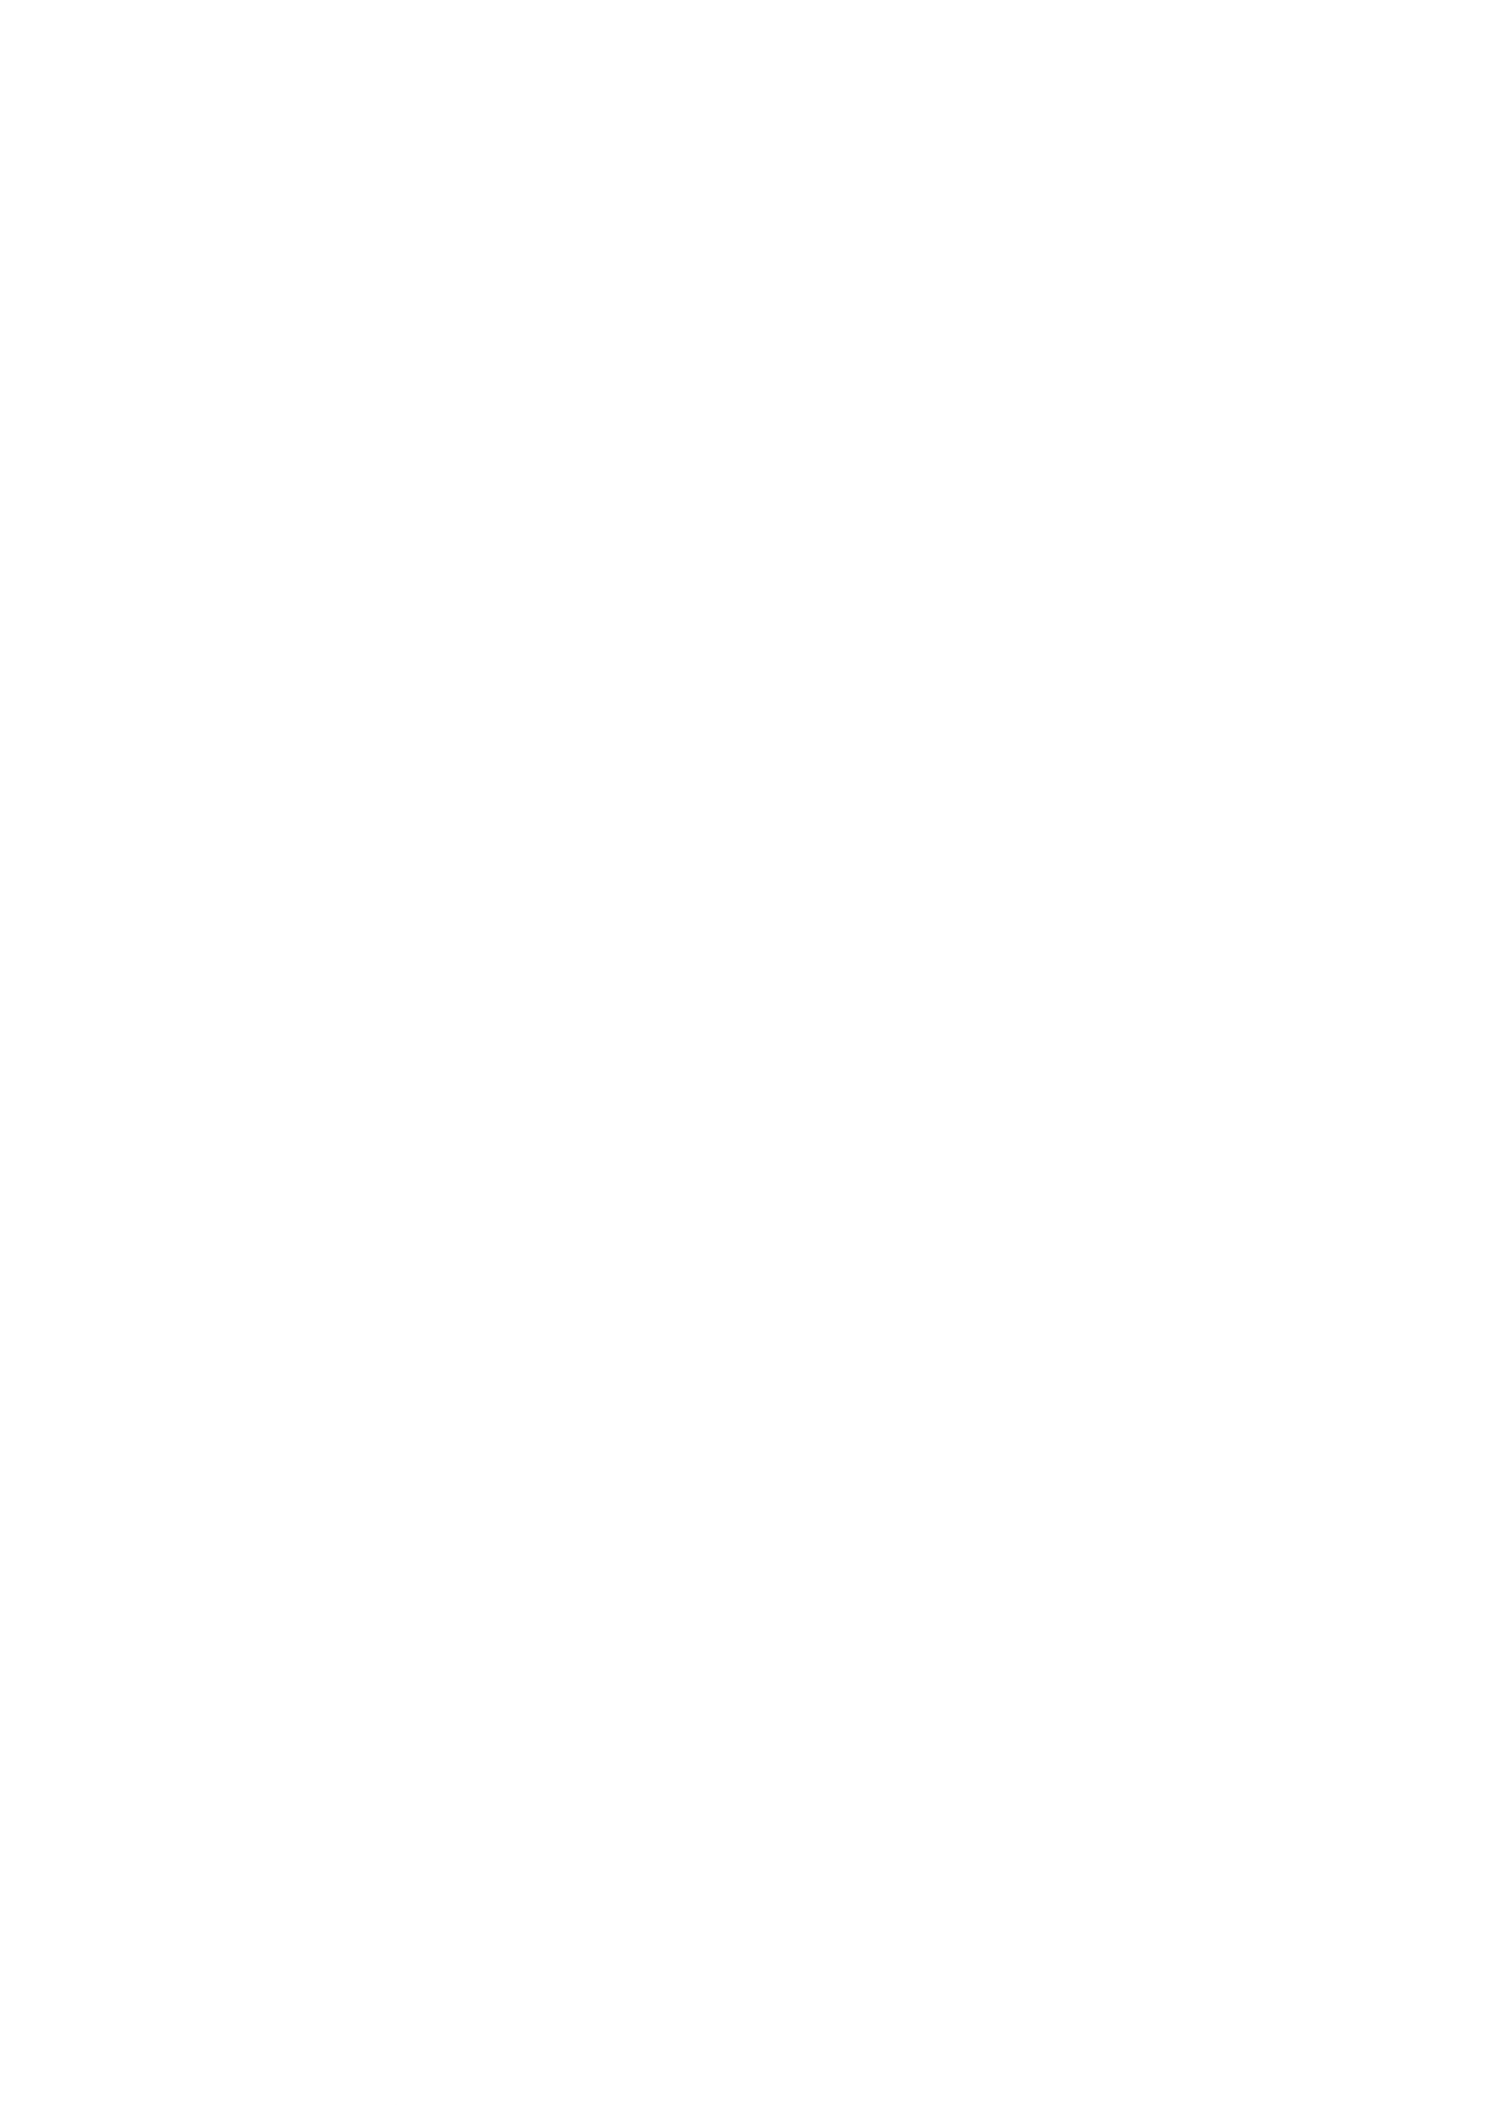 Hexagons Background